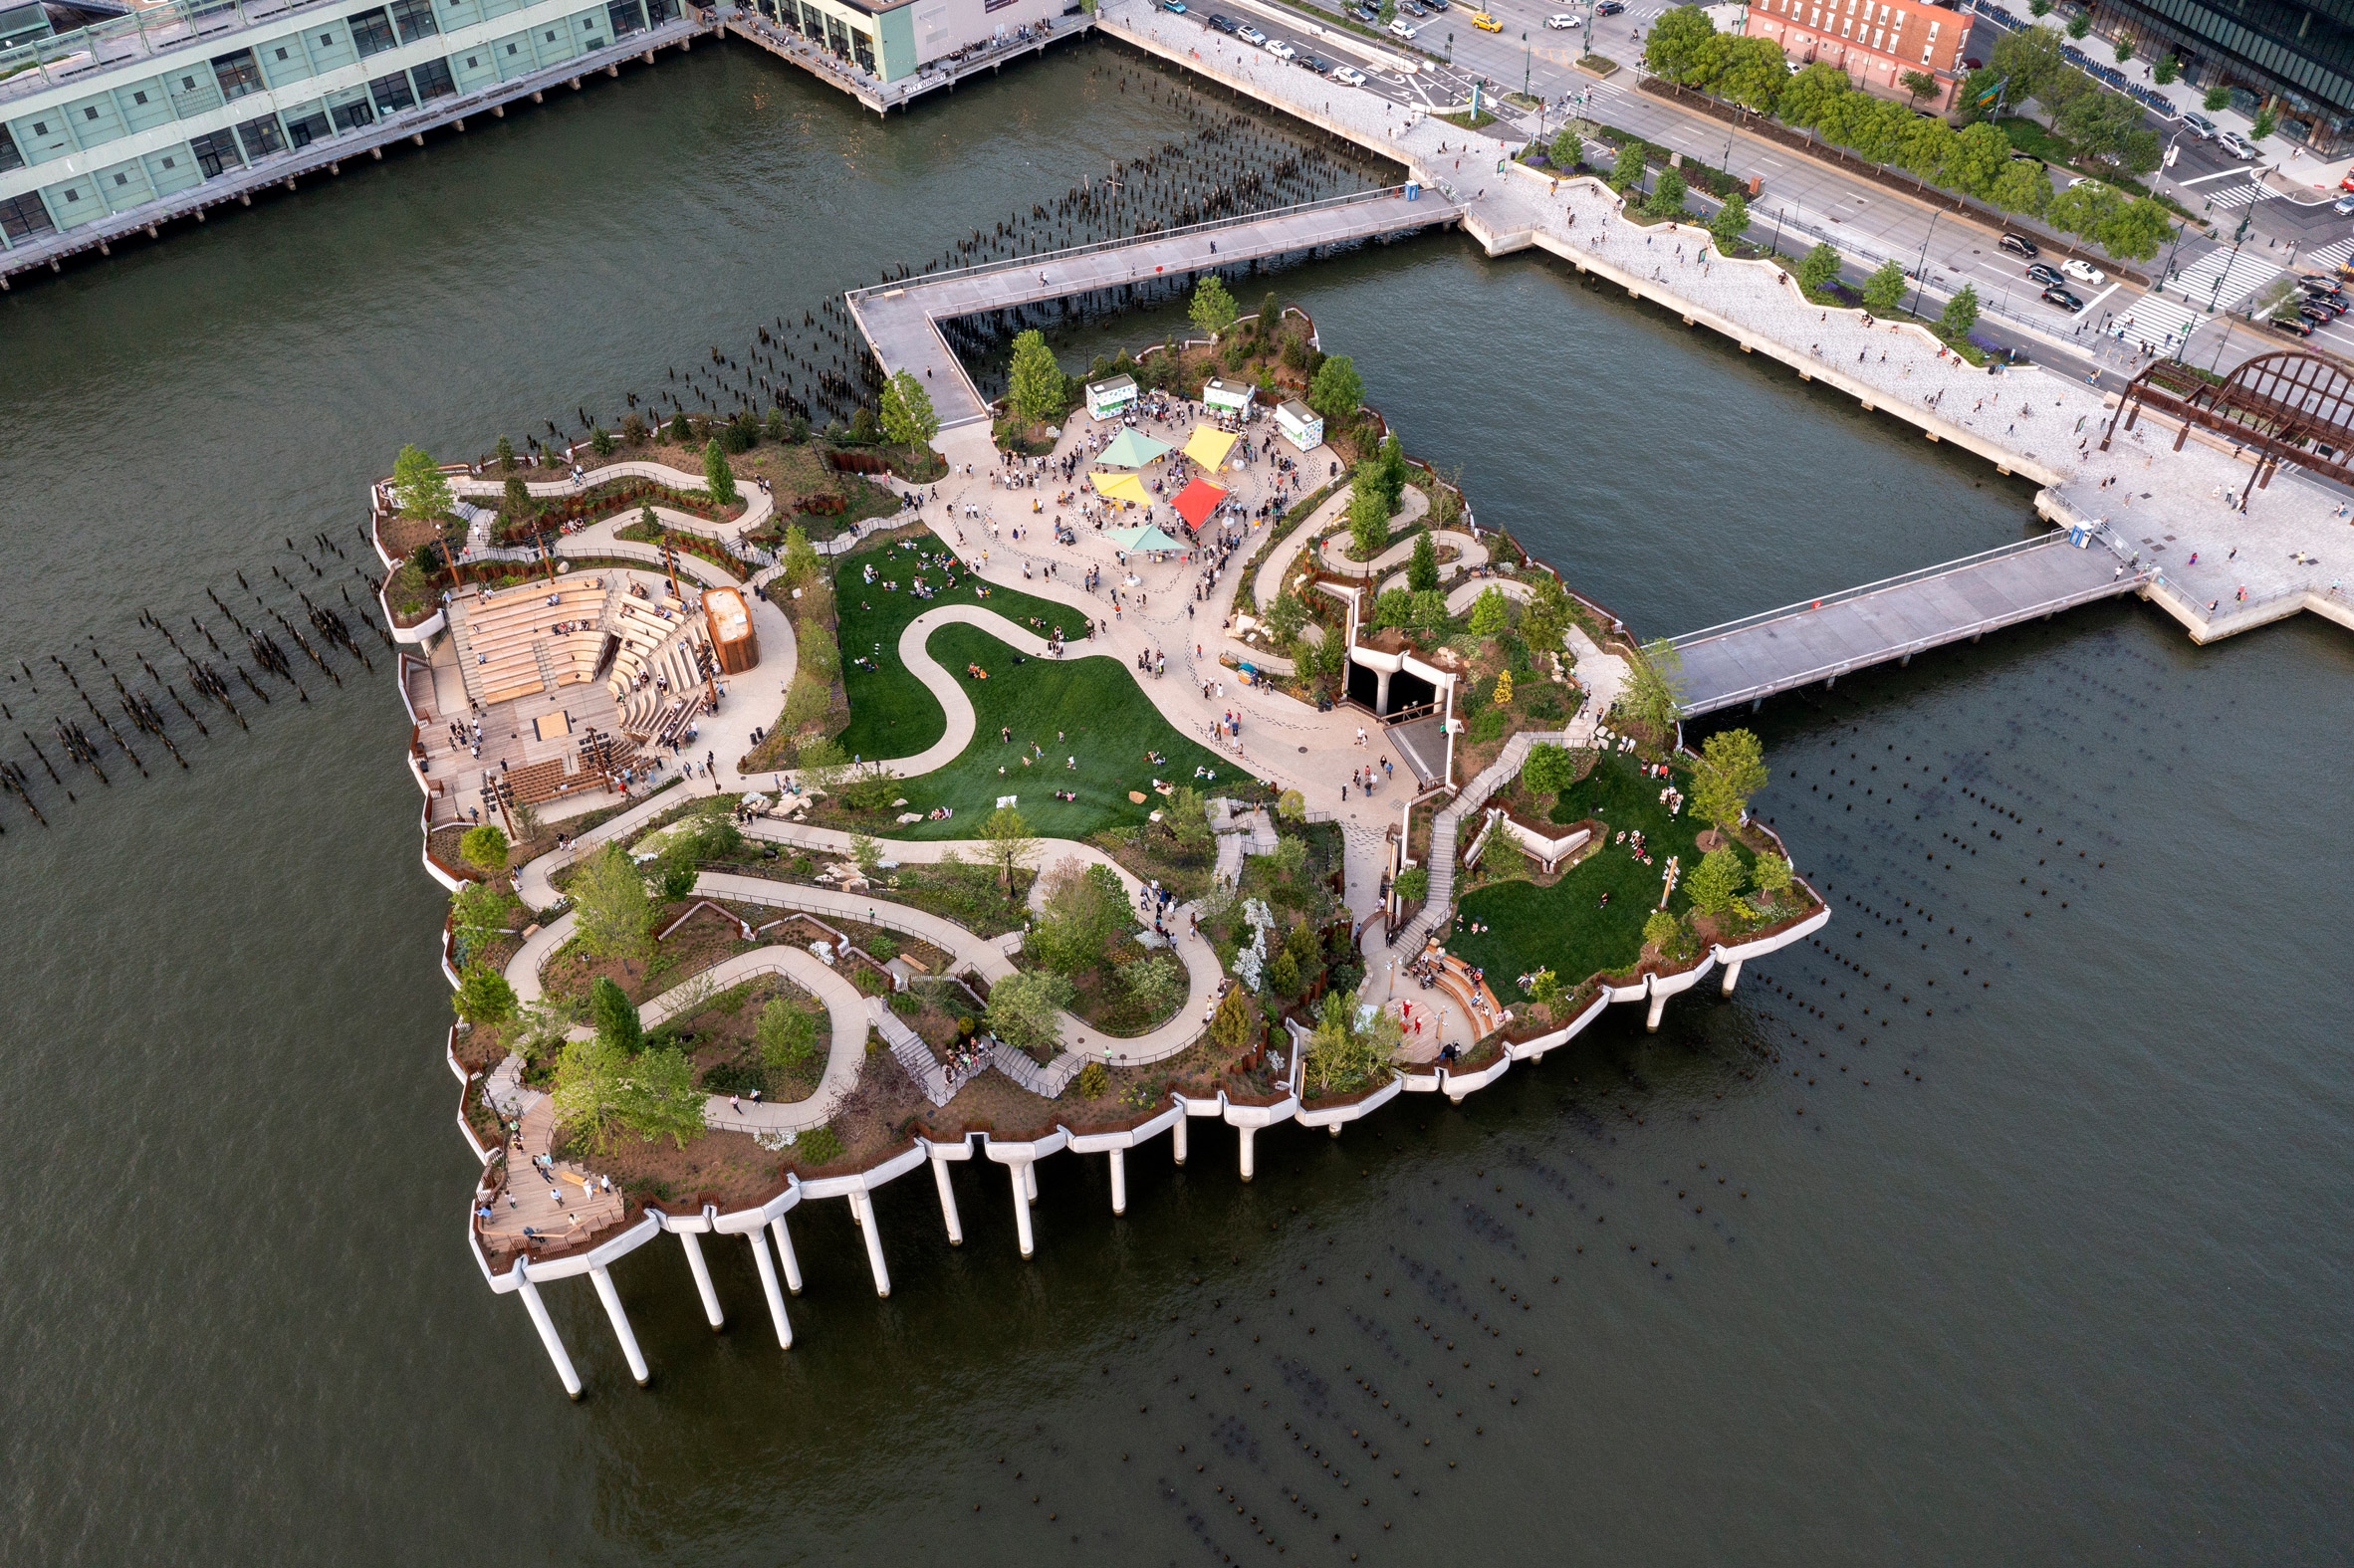 Photos reveal Thomas Heatherwick's Little Island in New York